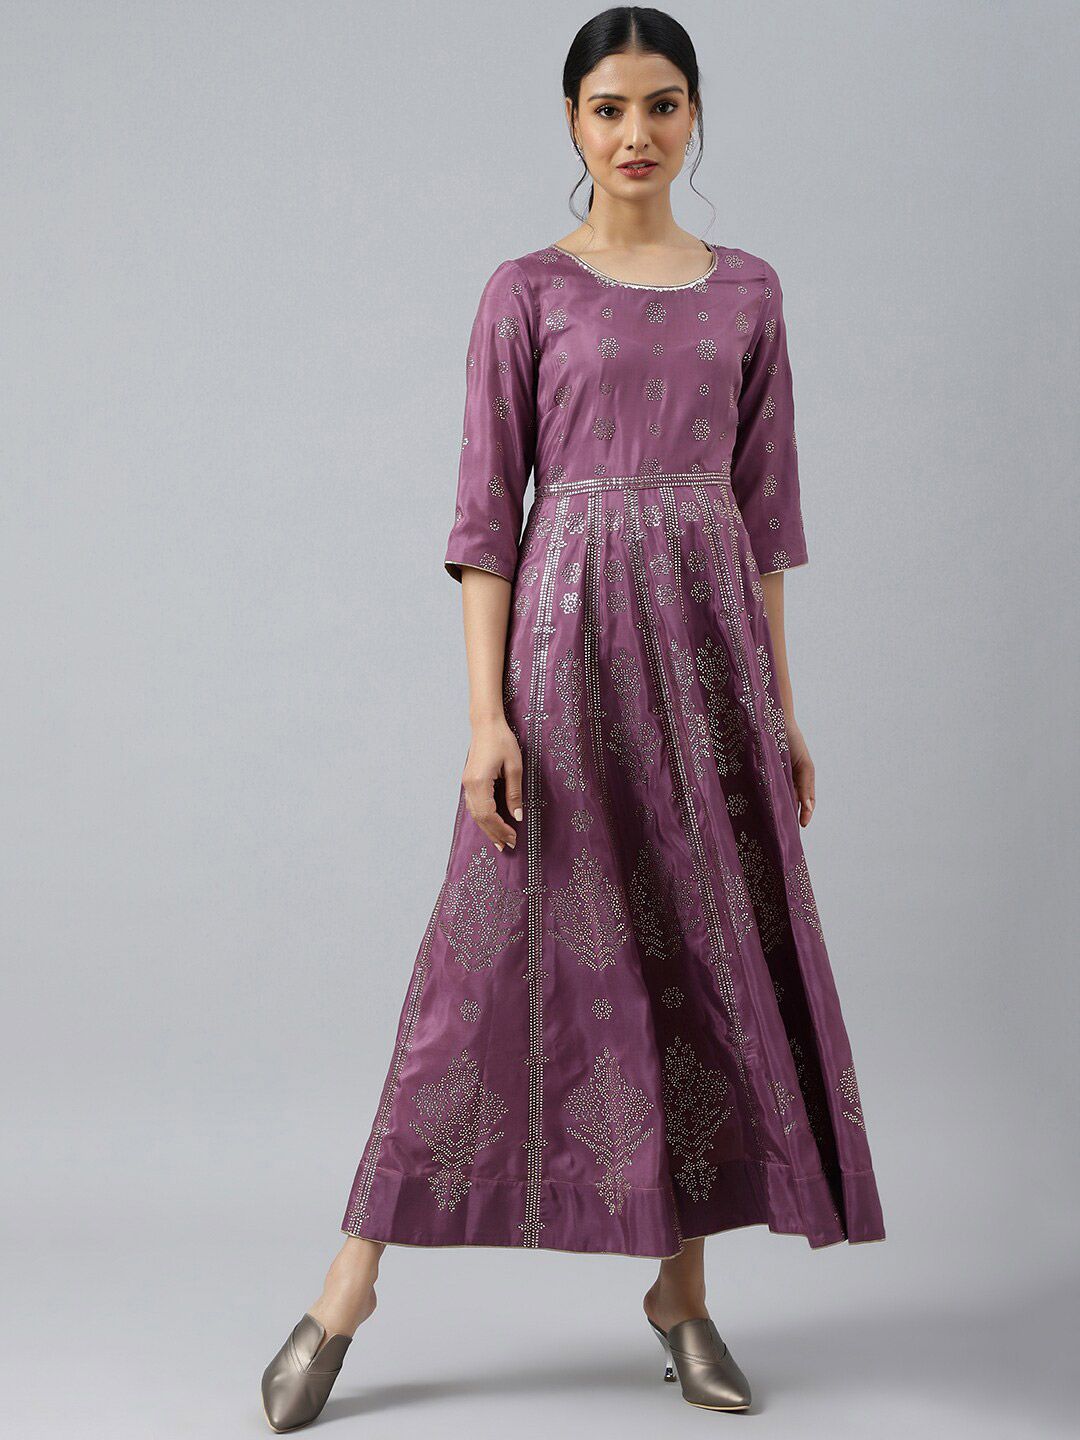 W Purple Ethnic Motifs Ethnic Maxi Dress Price in India